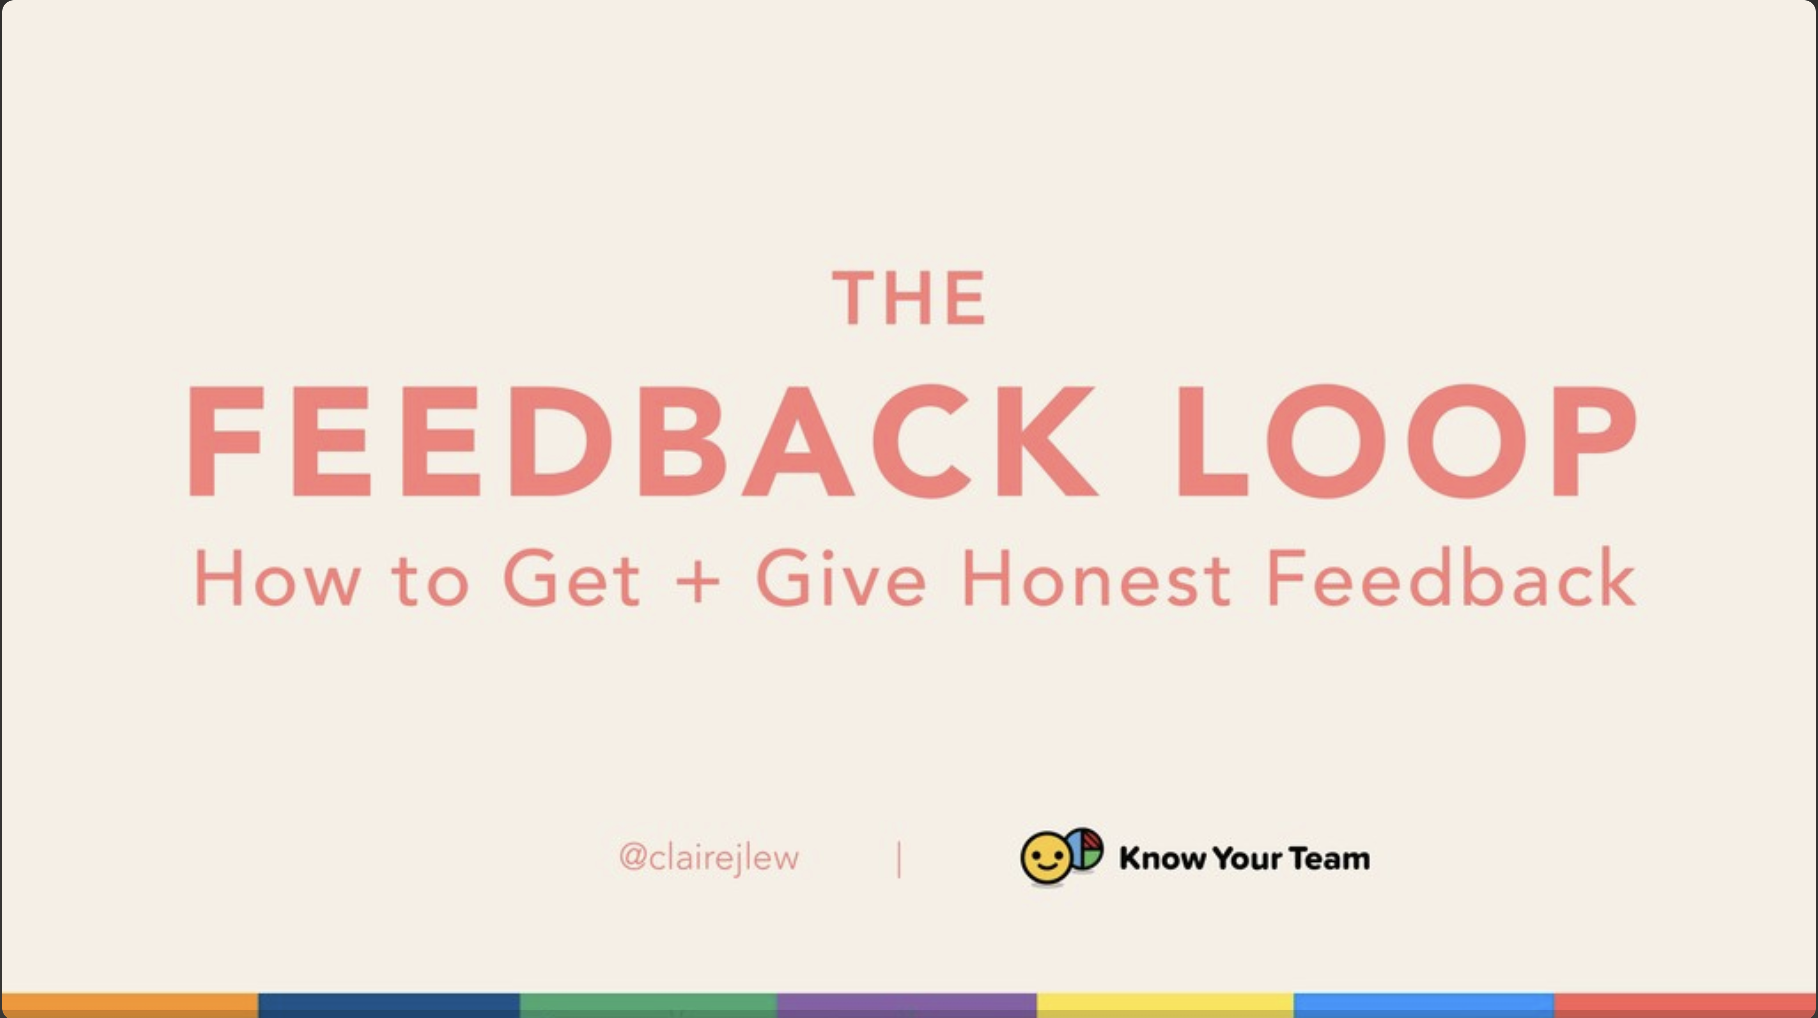 The Feedback Loop: How to Get + Give Honest Feedback